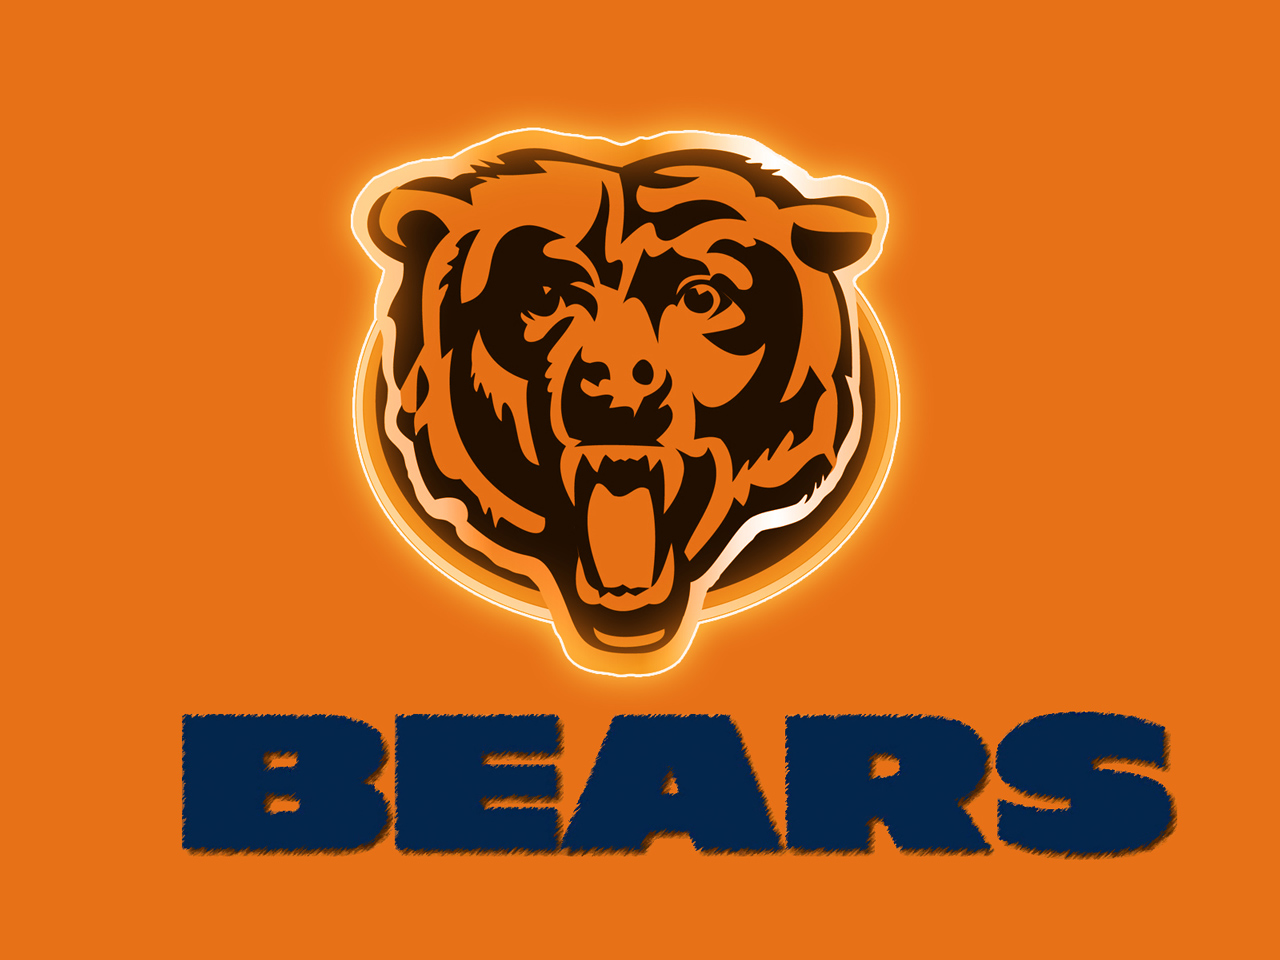 Chicago Bears Football Puter Desktop Wallpaper Pictures